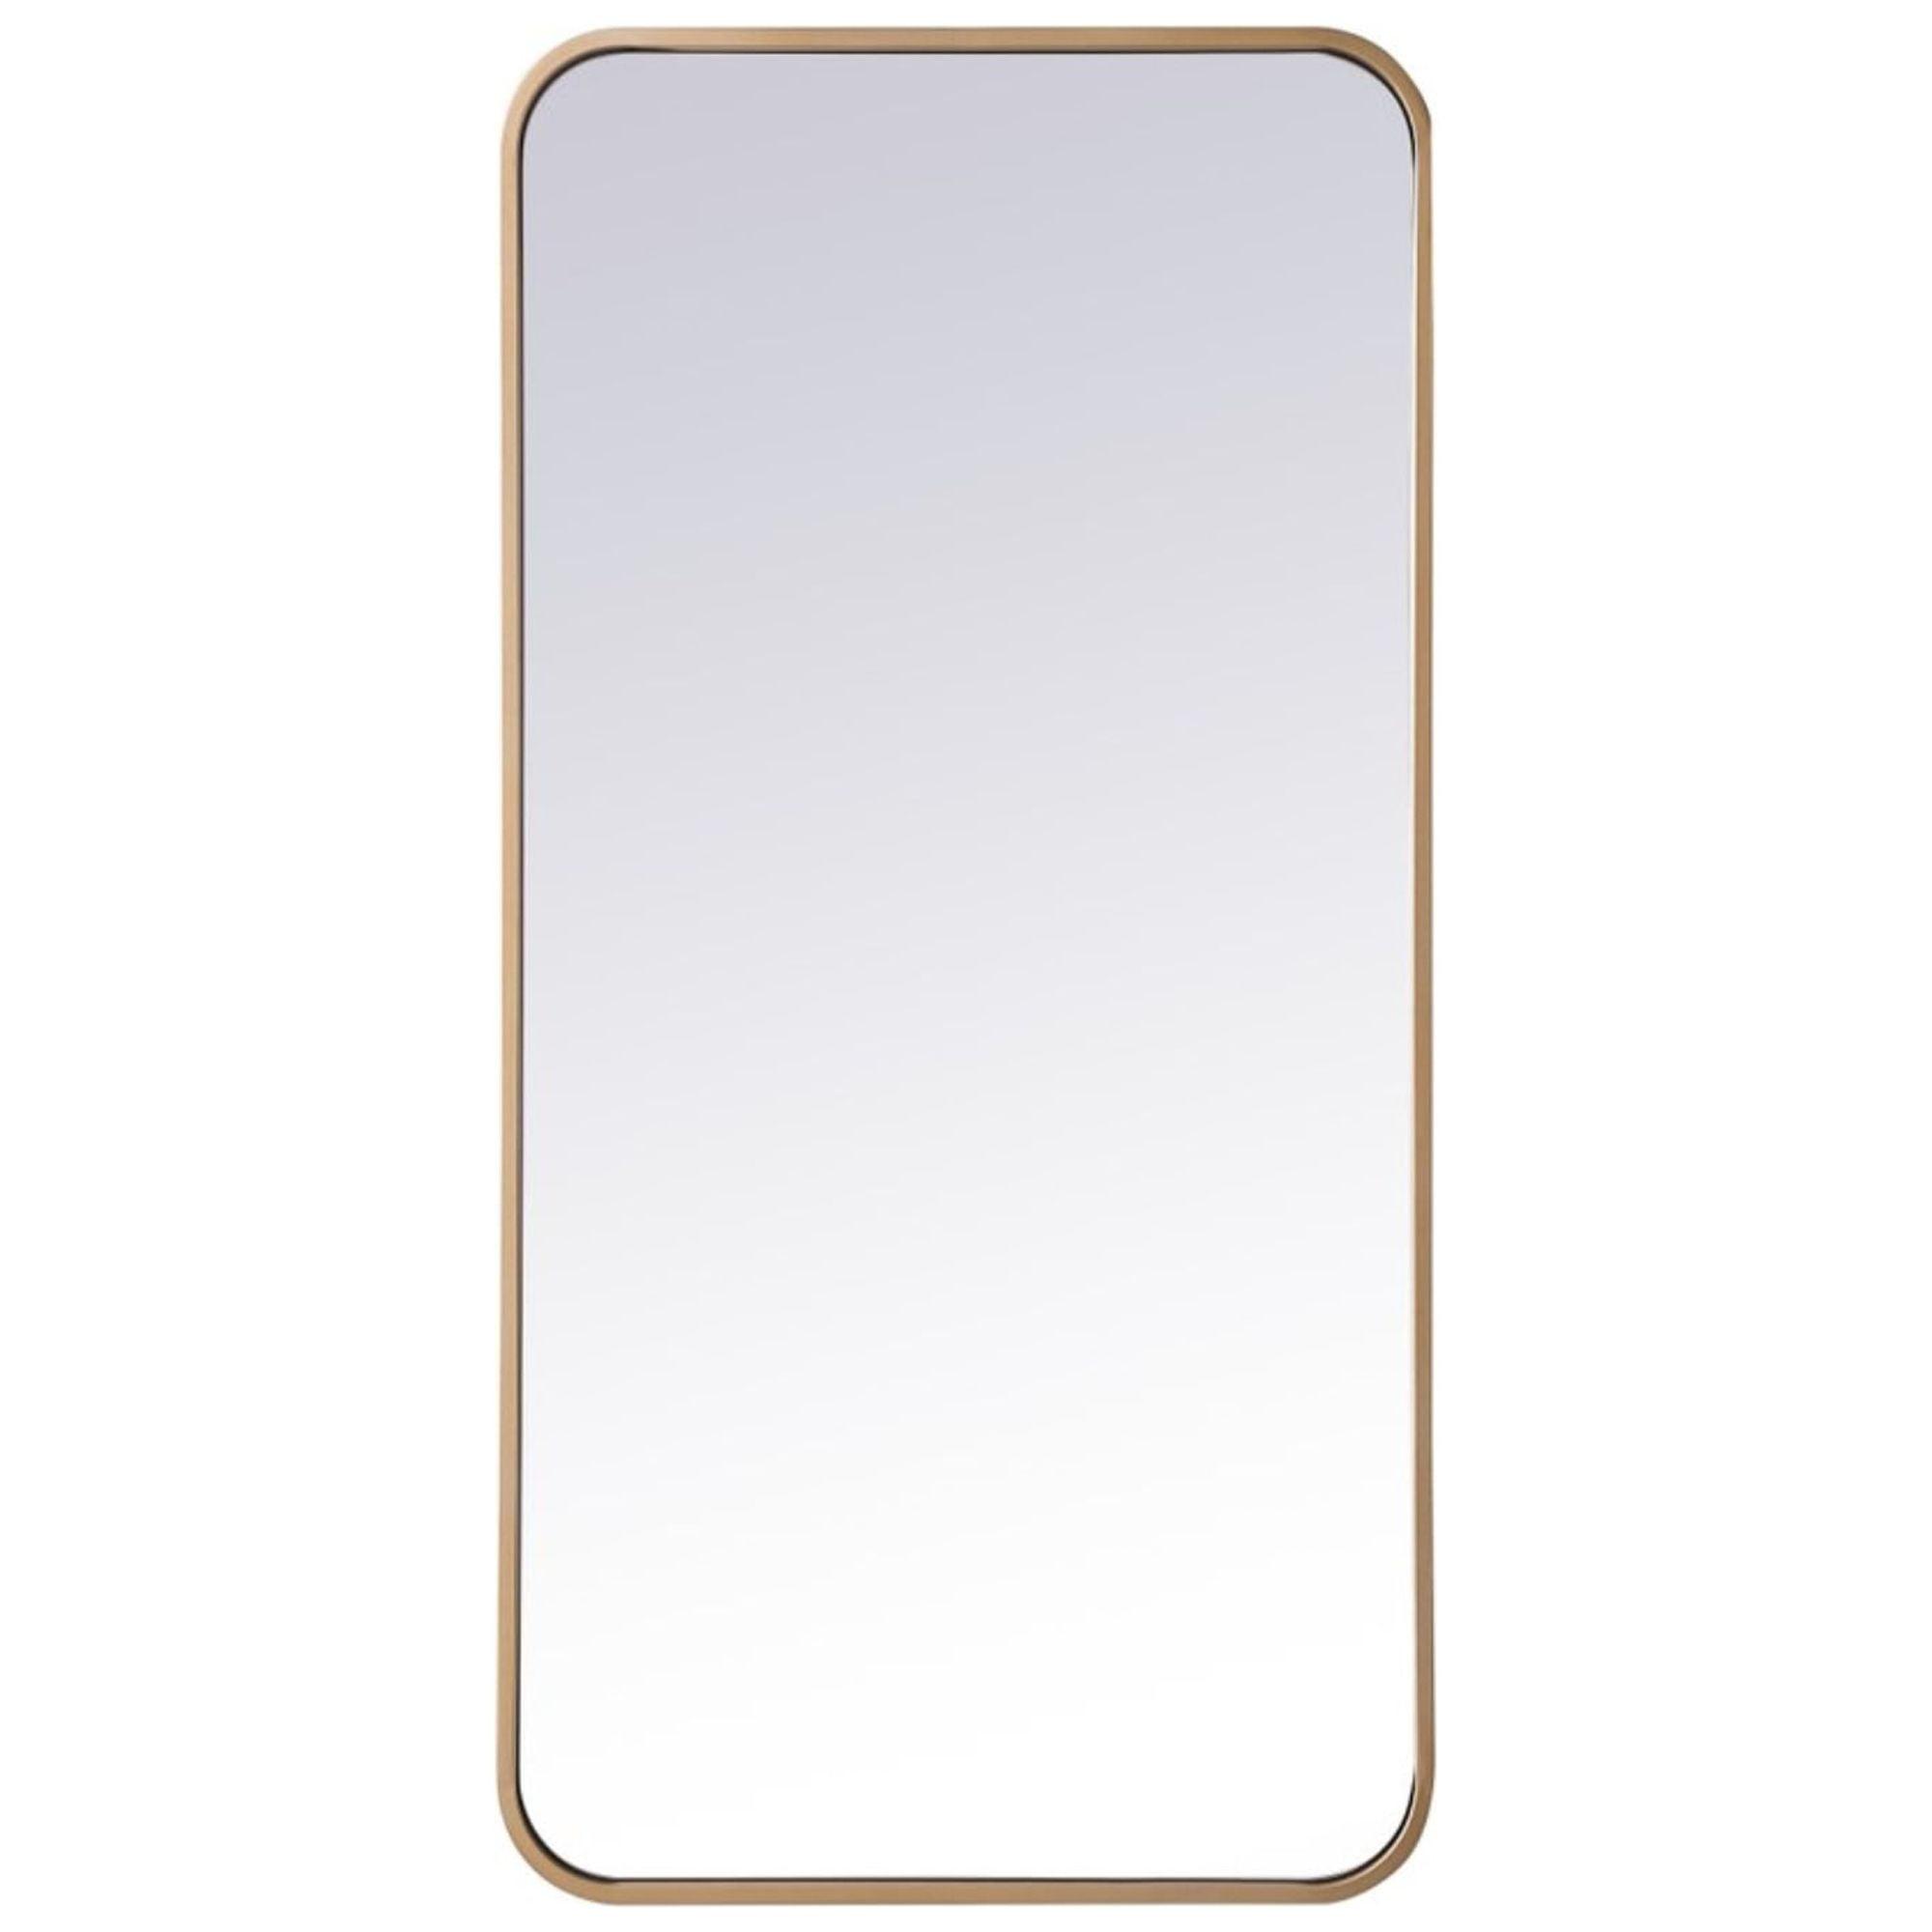 Contemporary Gold Brass Rectangular Bathroom Mirror 18x36 inch